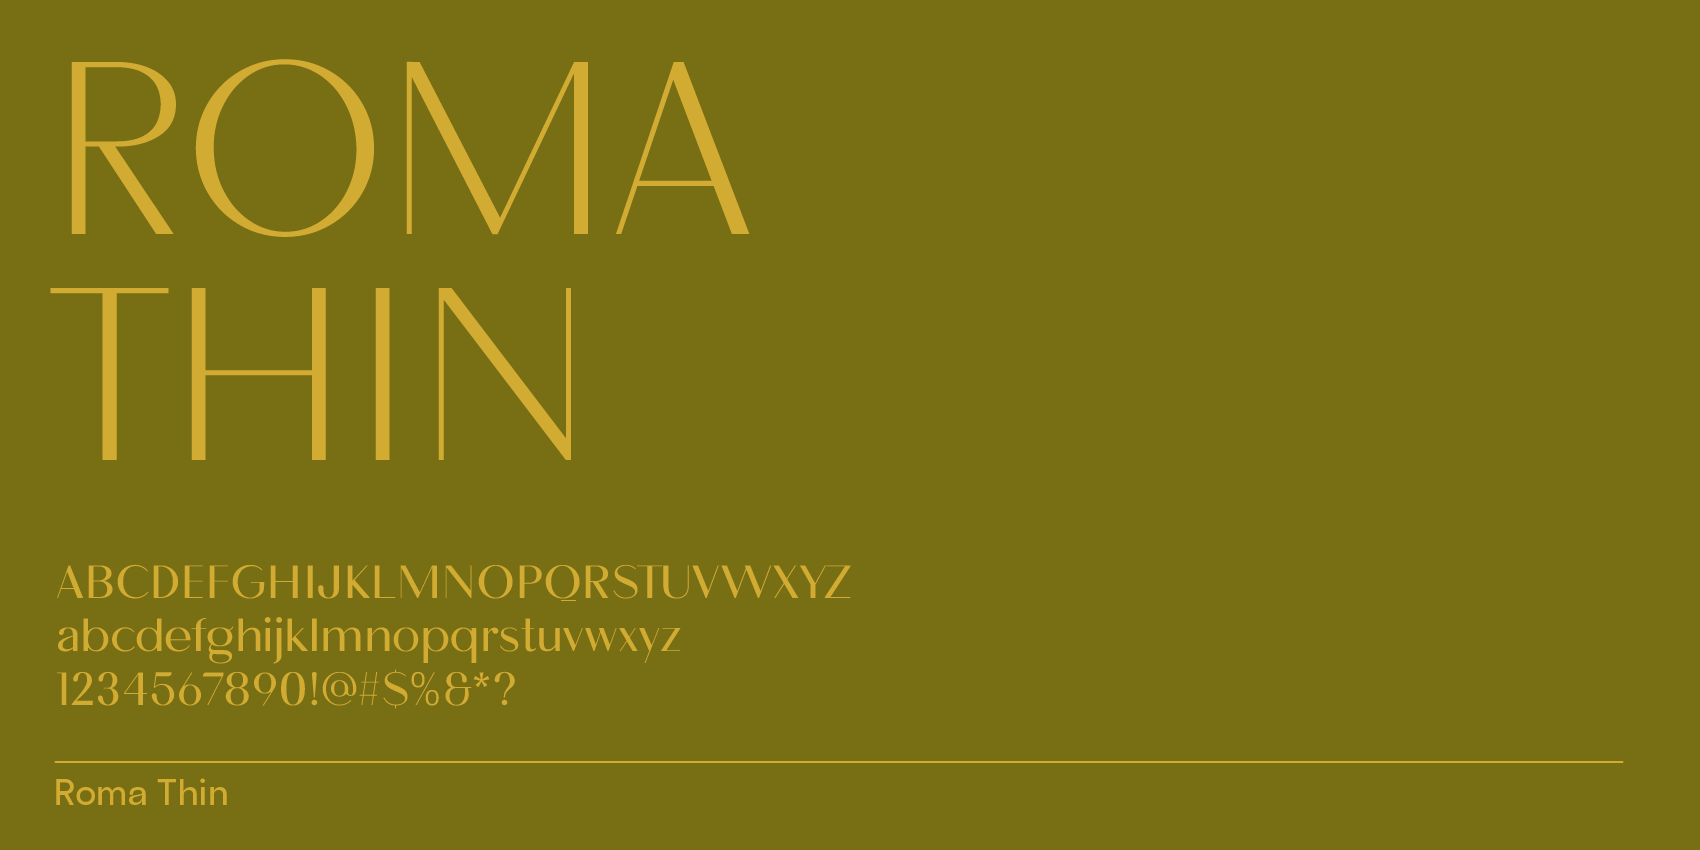 Roma thin, elegant contrast typeface